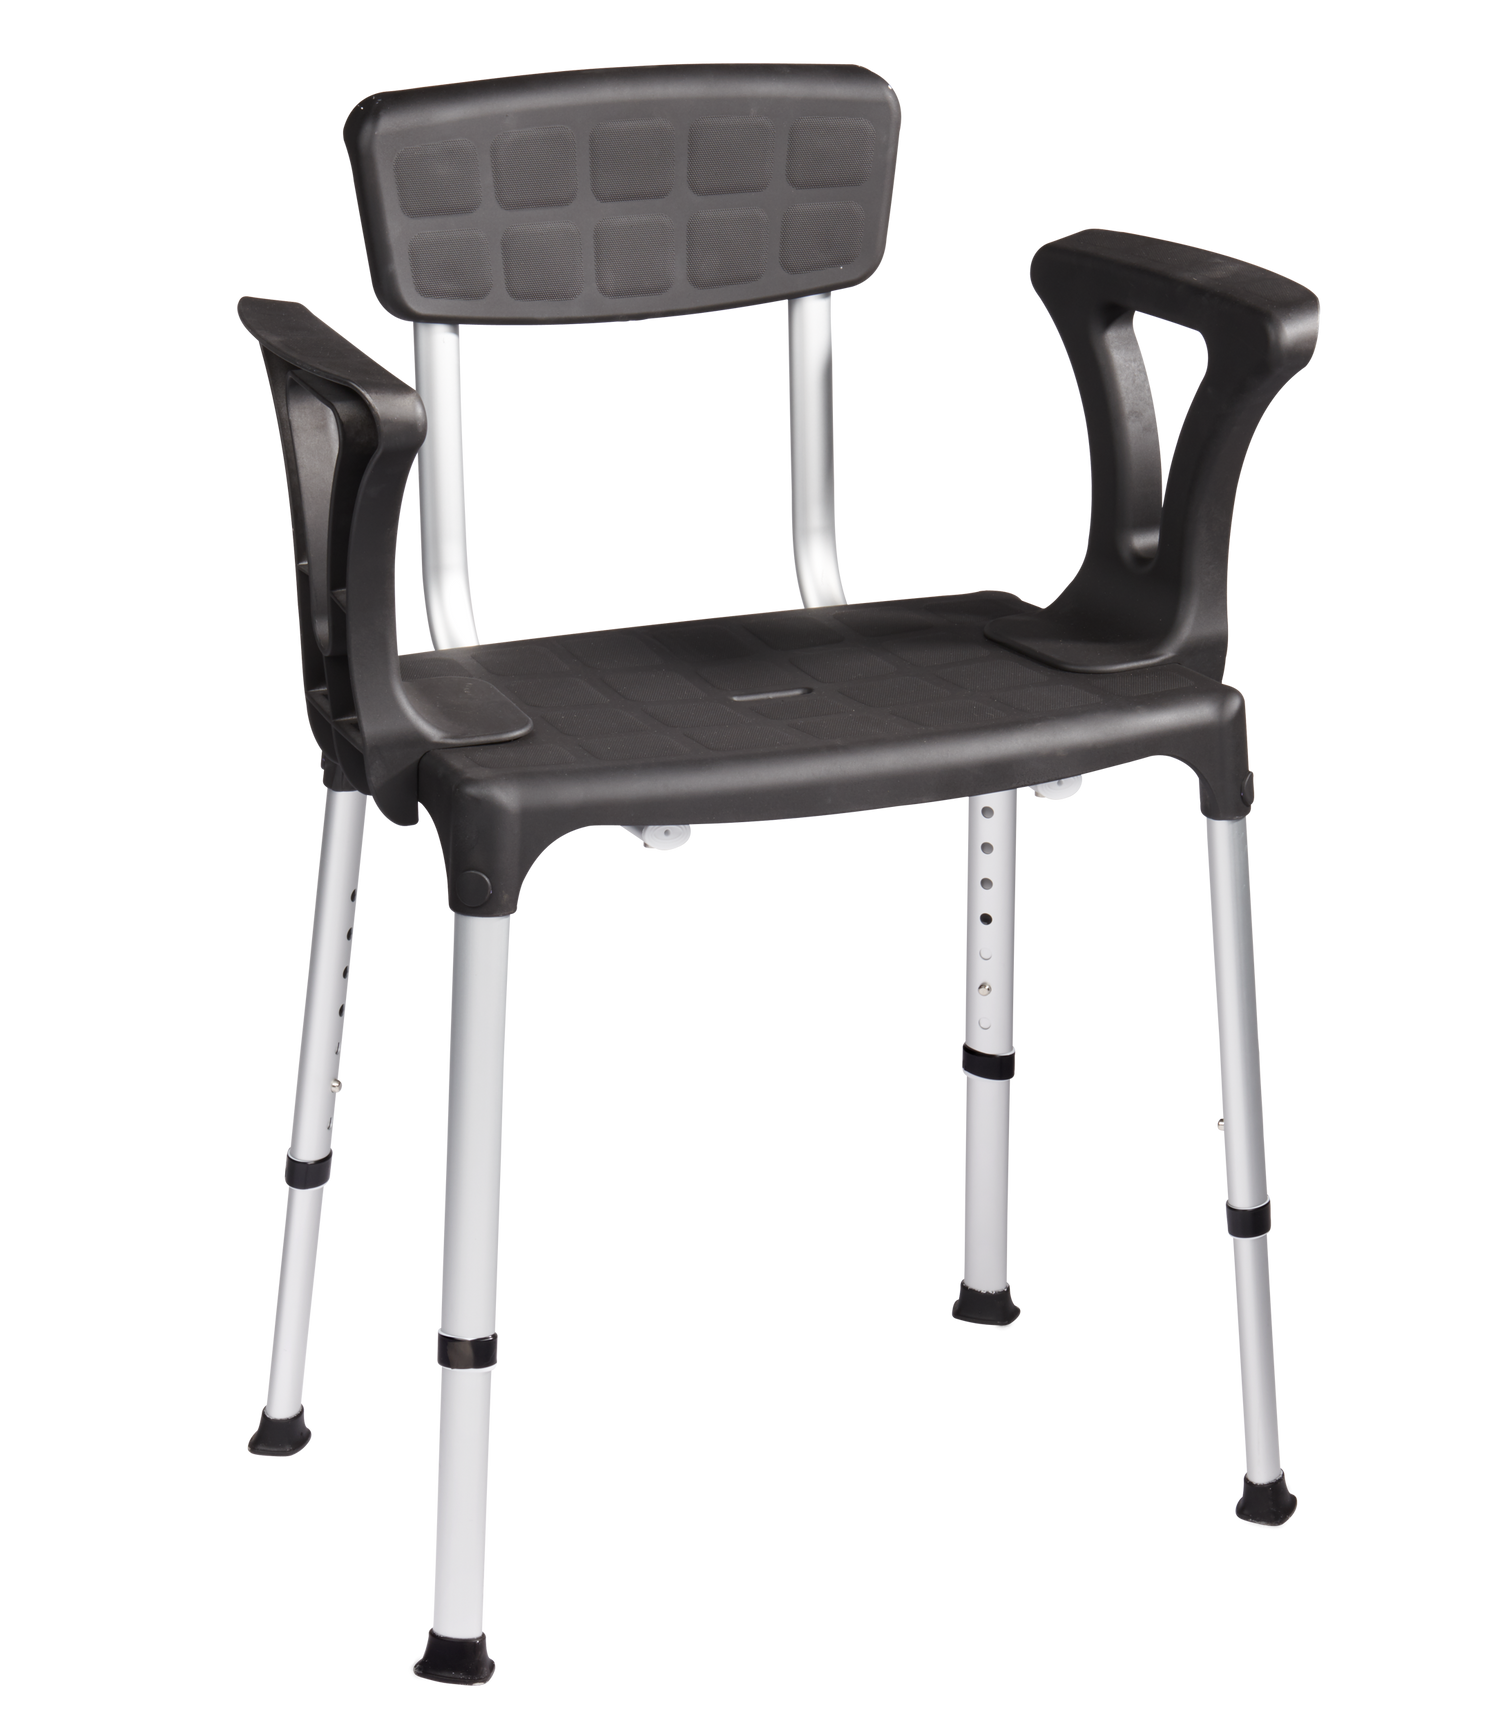 SecuCare Quattro armrest for shower chair, black